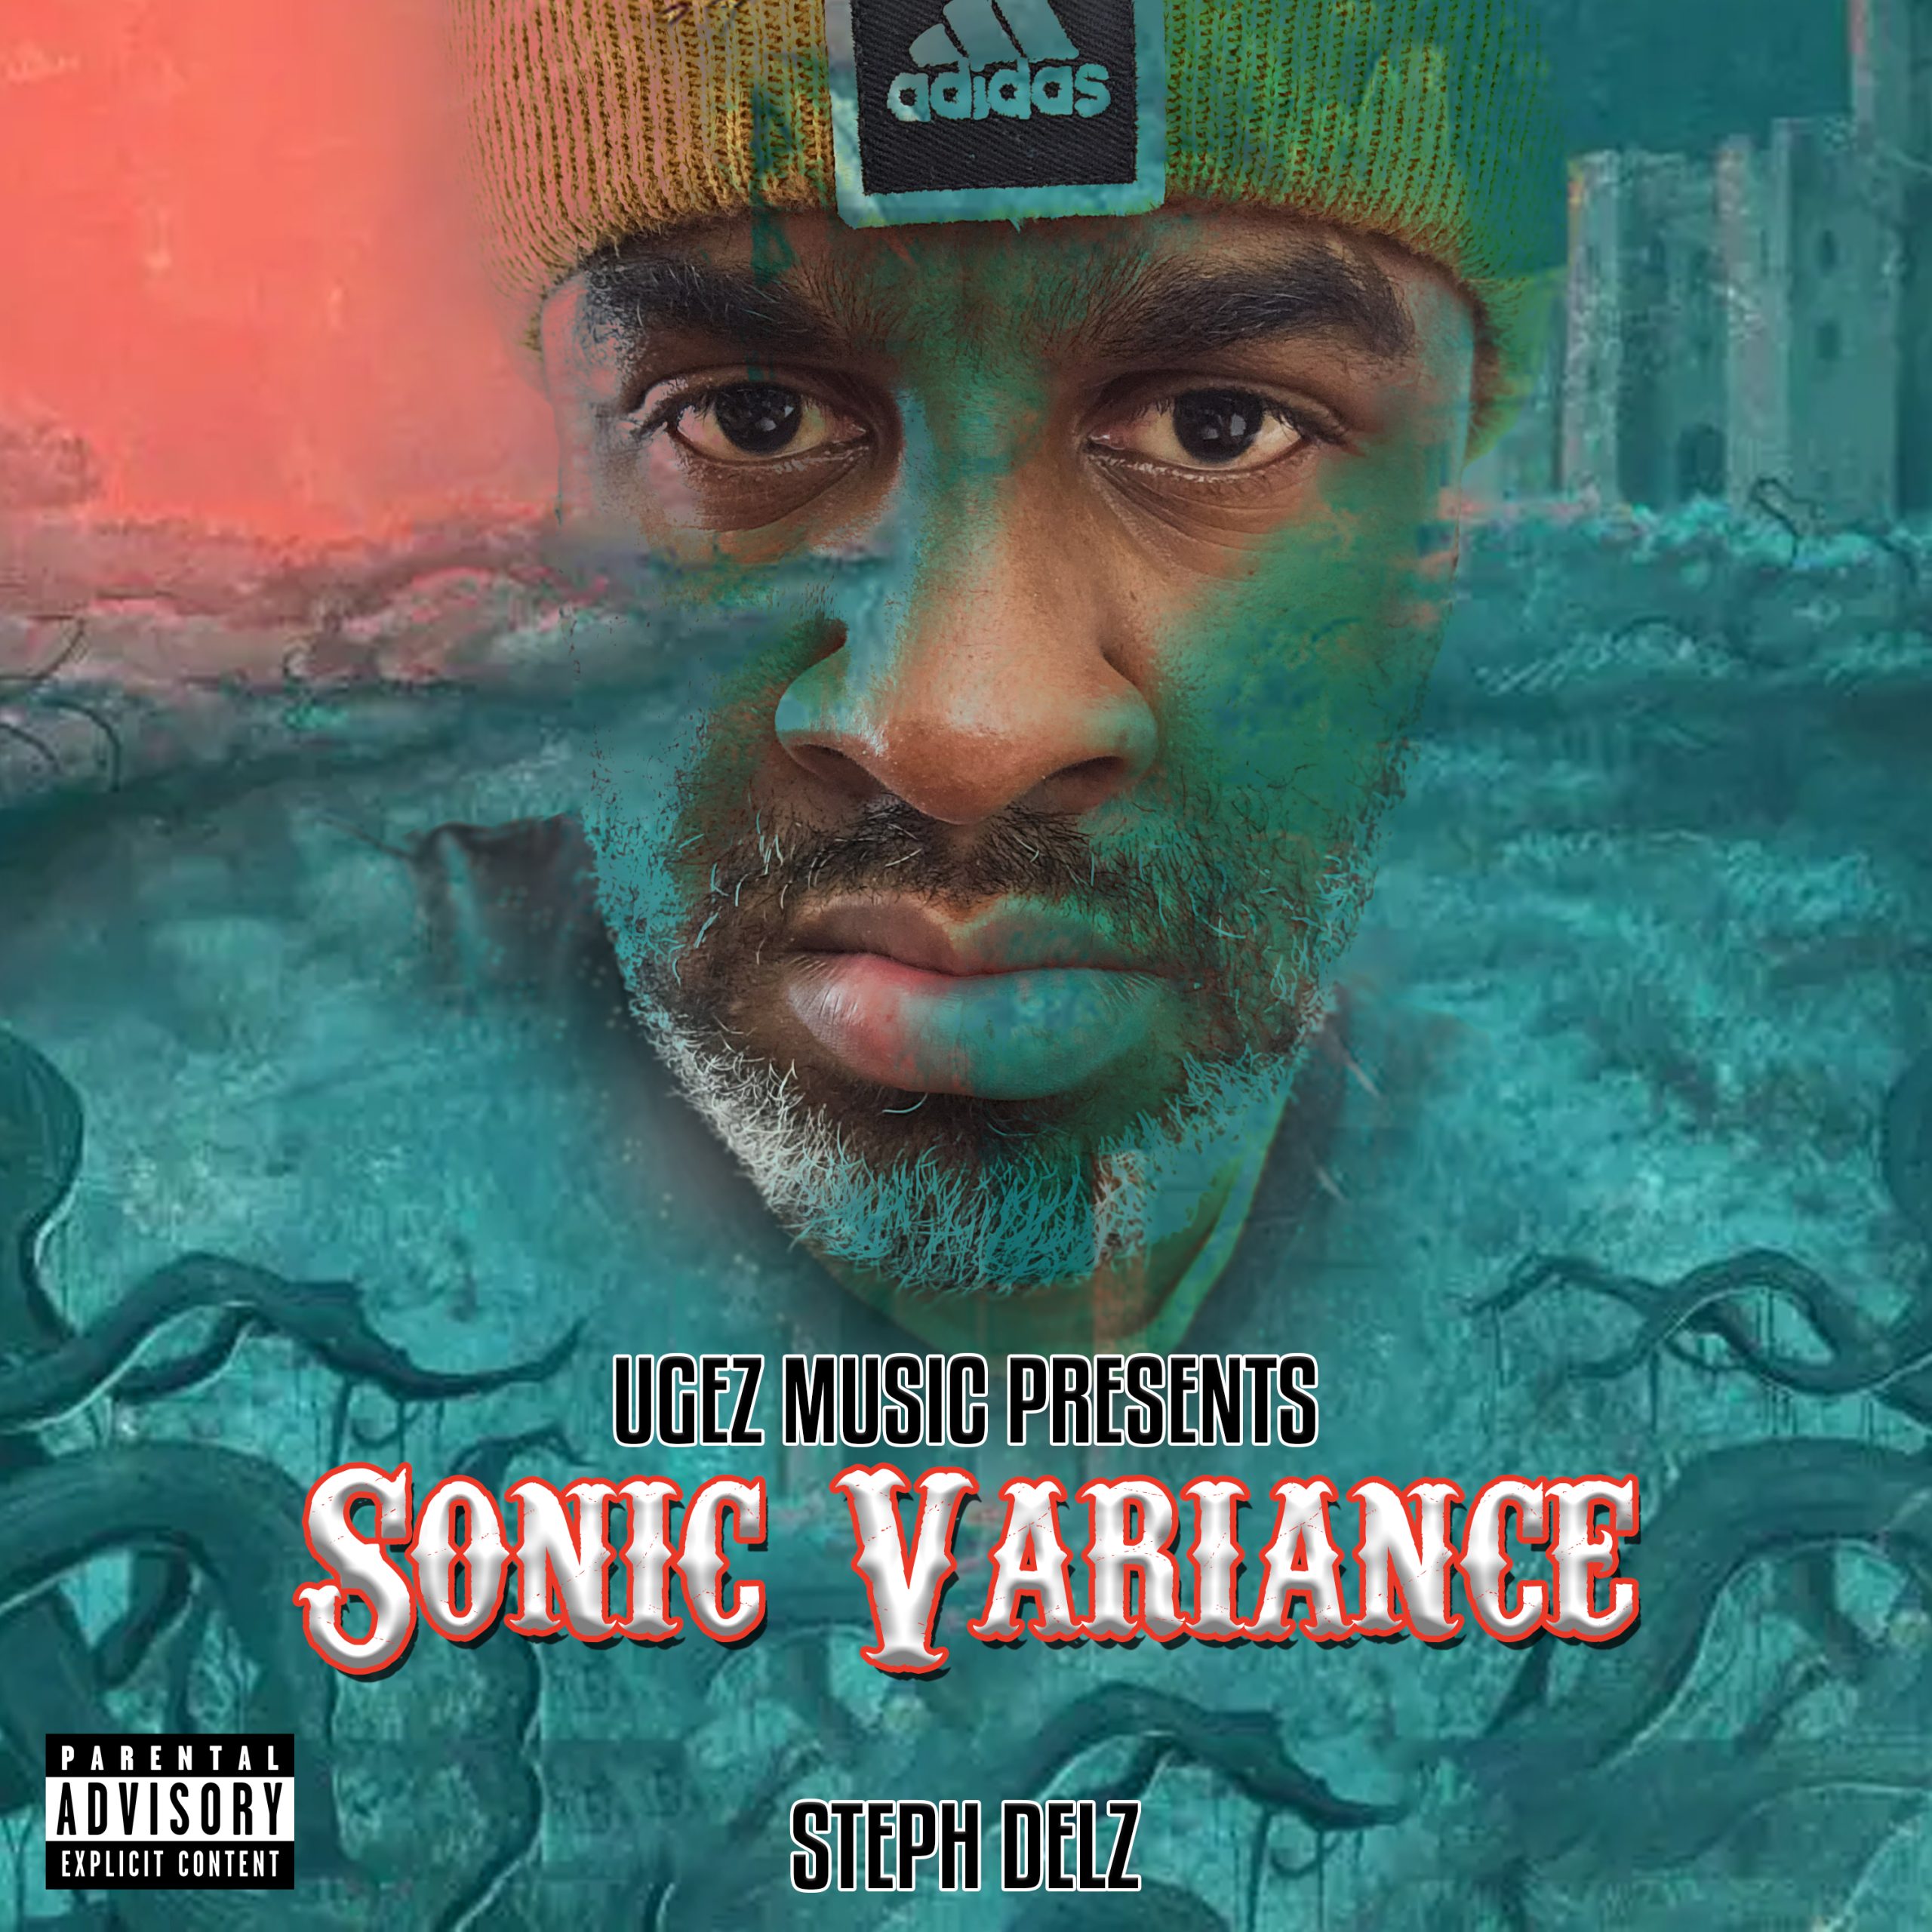 Steph Delz releases new album Sonic Variance